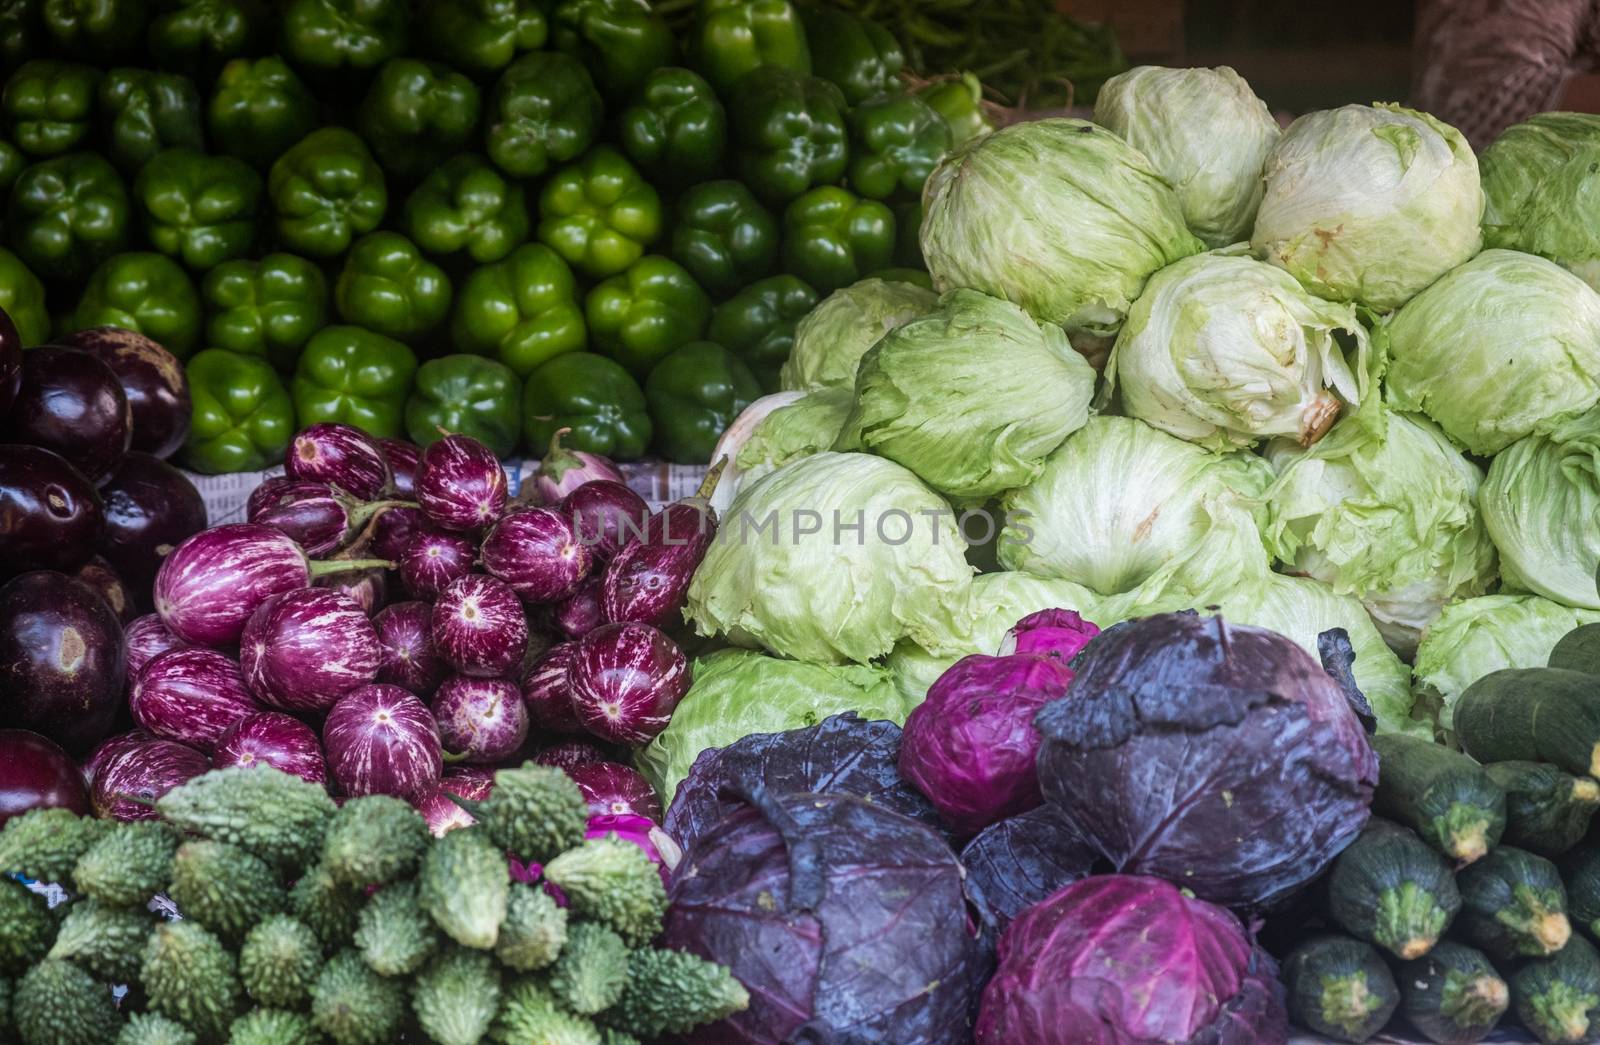 Vegetables For Sale At Market Stall